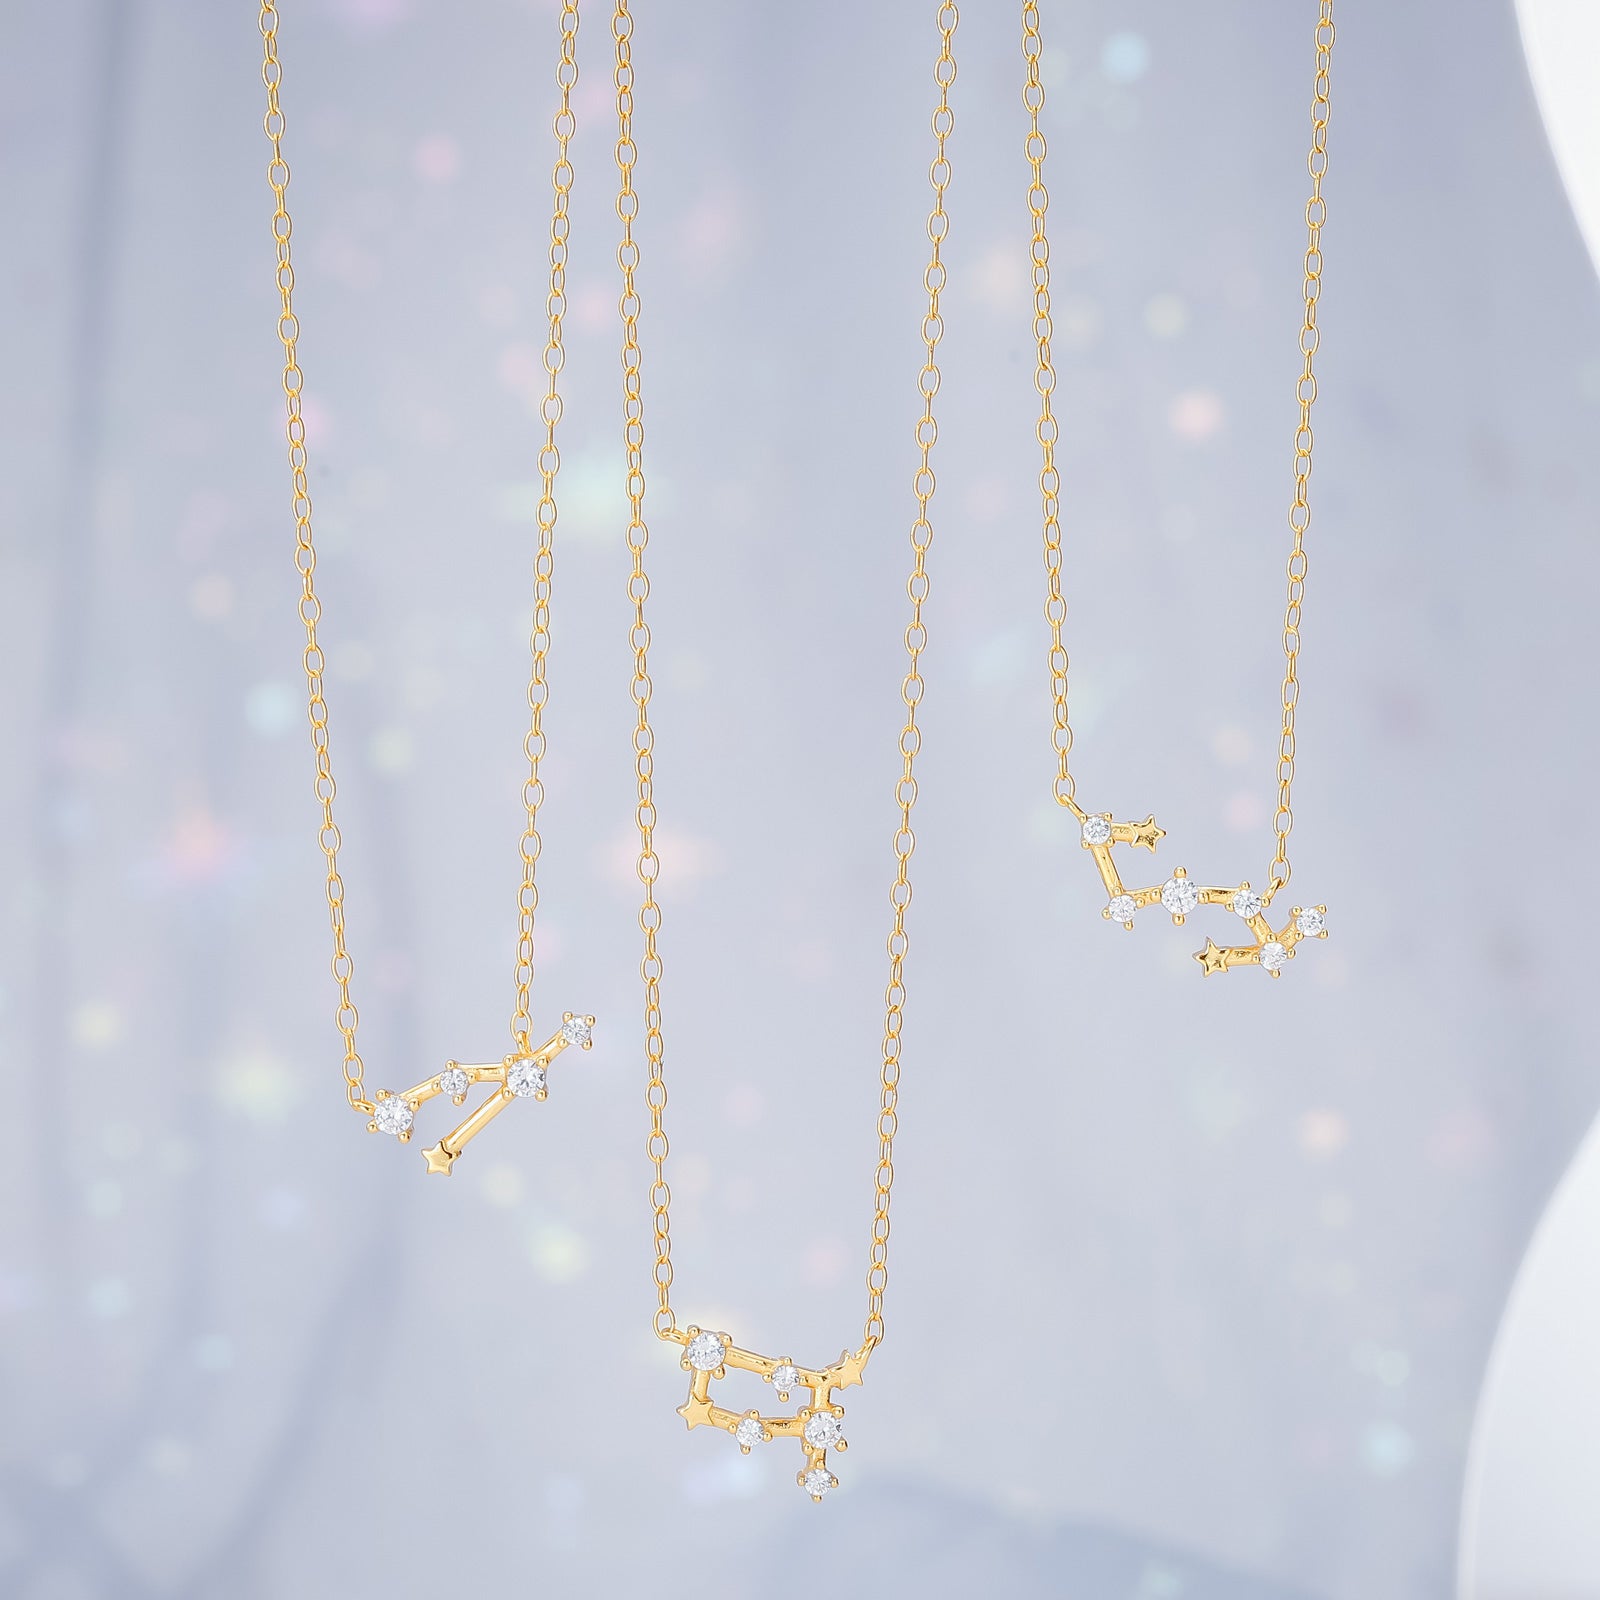 Silver Scorpio Constellation Necklace Set